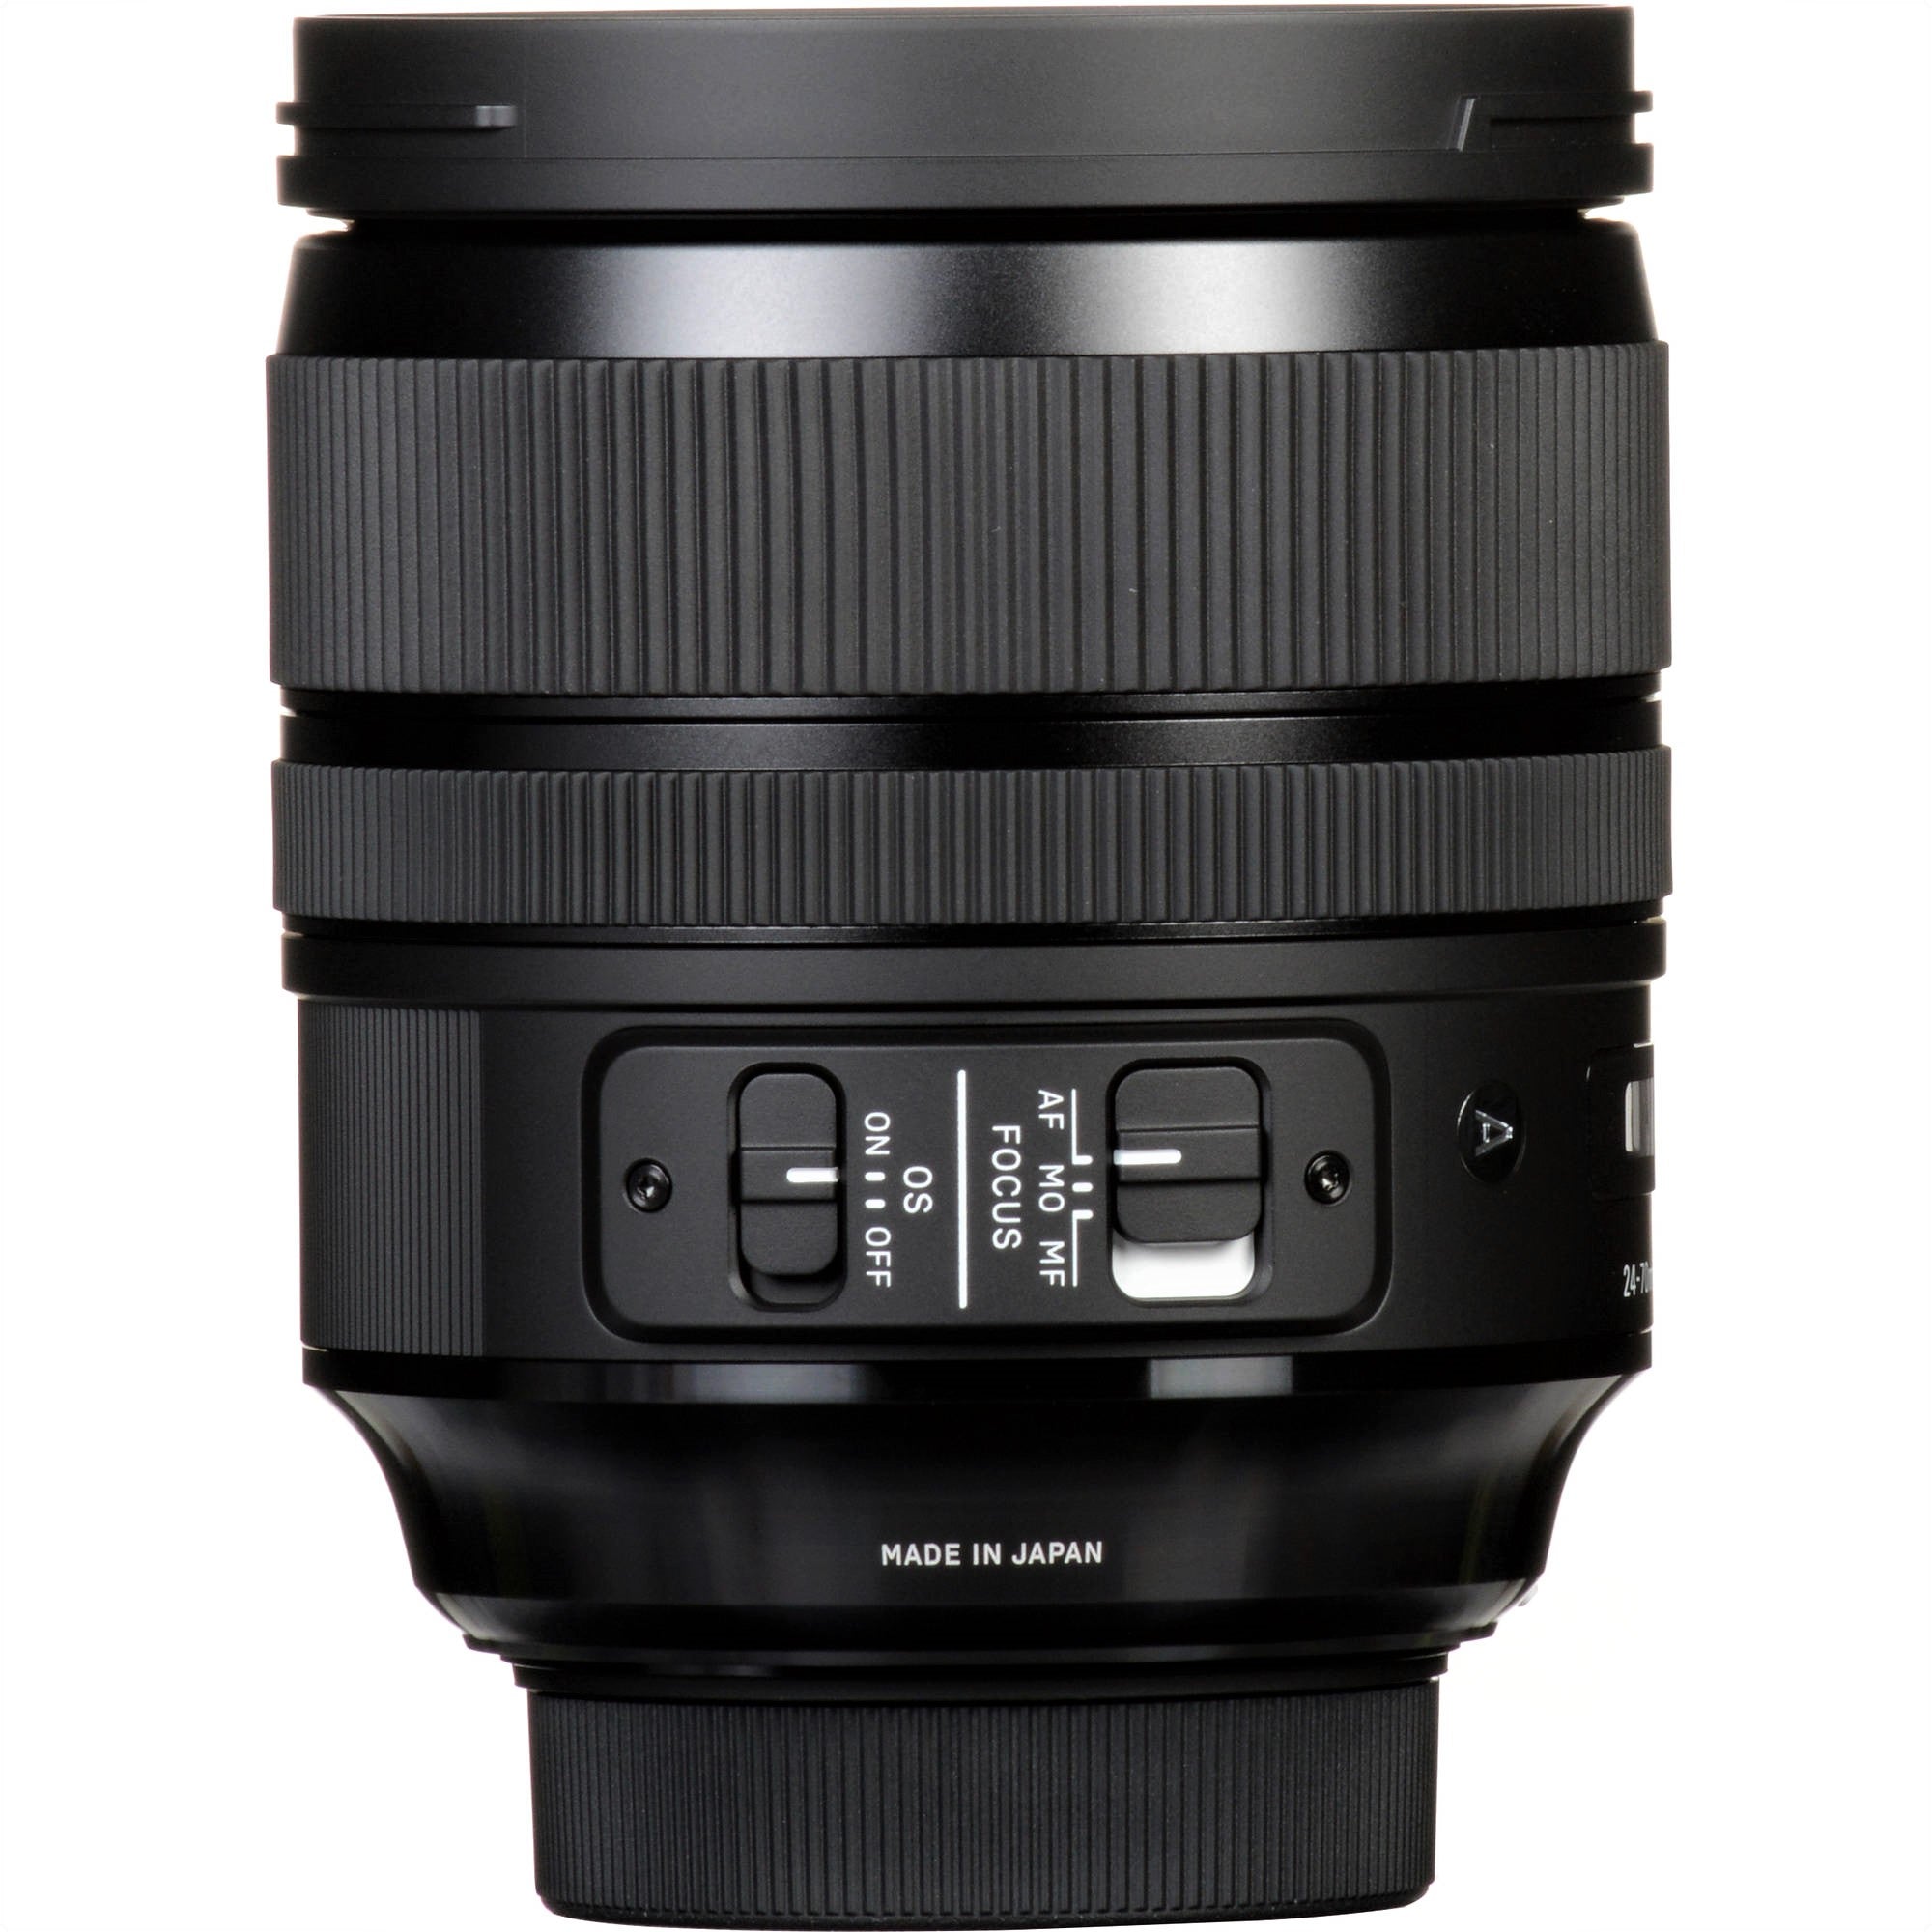 Sigma 24-70mm F2.8 DG OS HSM Art Lens for Sigma SA